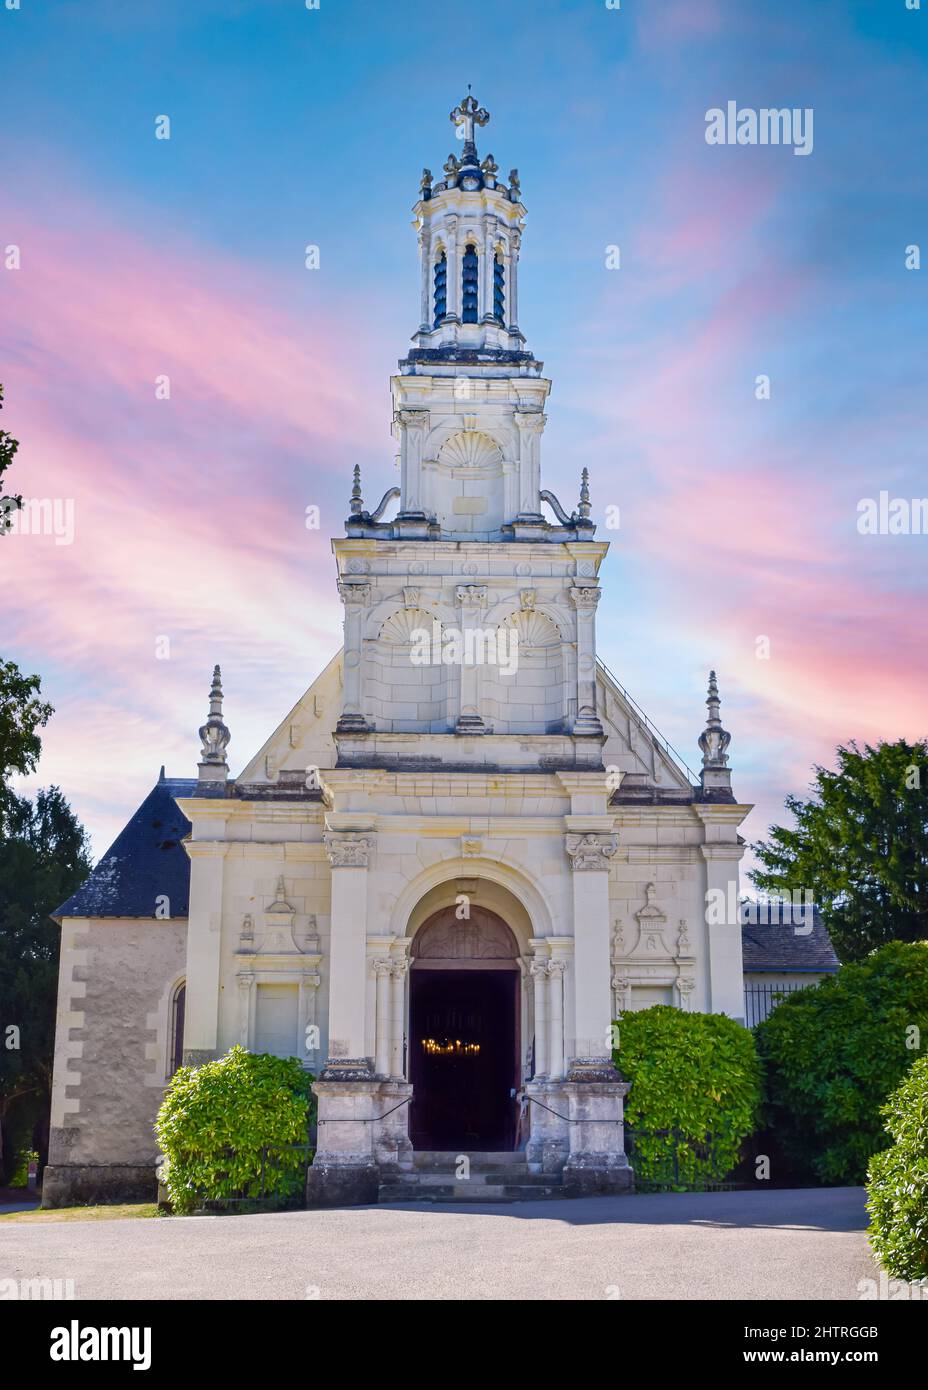 Photo of the parish of Saint Louis de Chambord in the 17th century Renaissance style, France Stock Photo